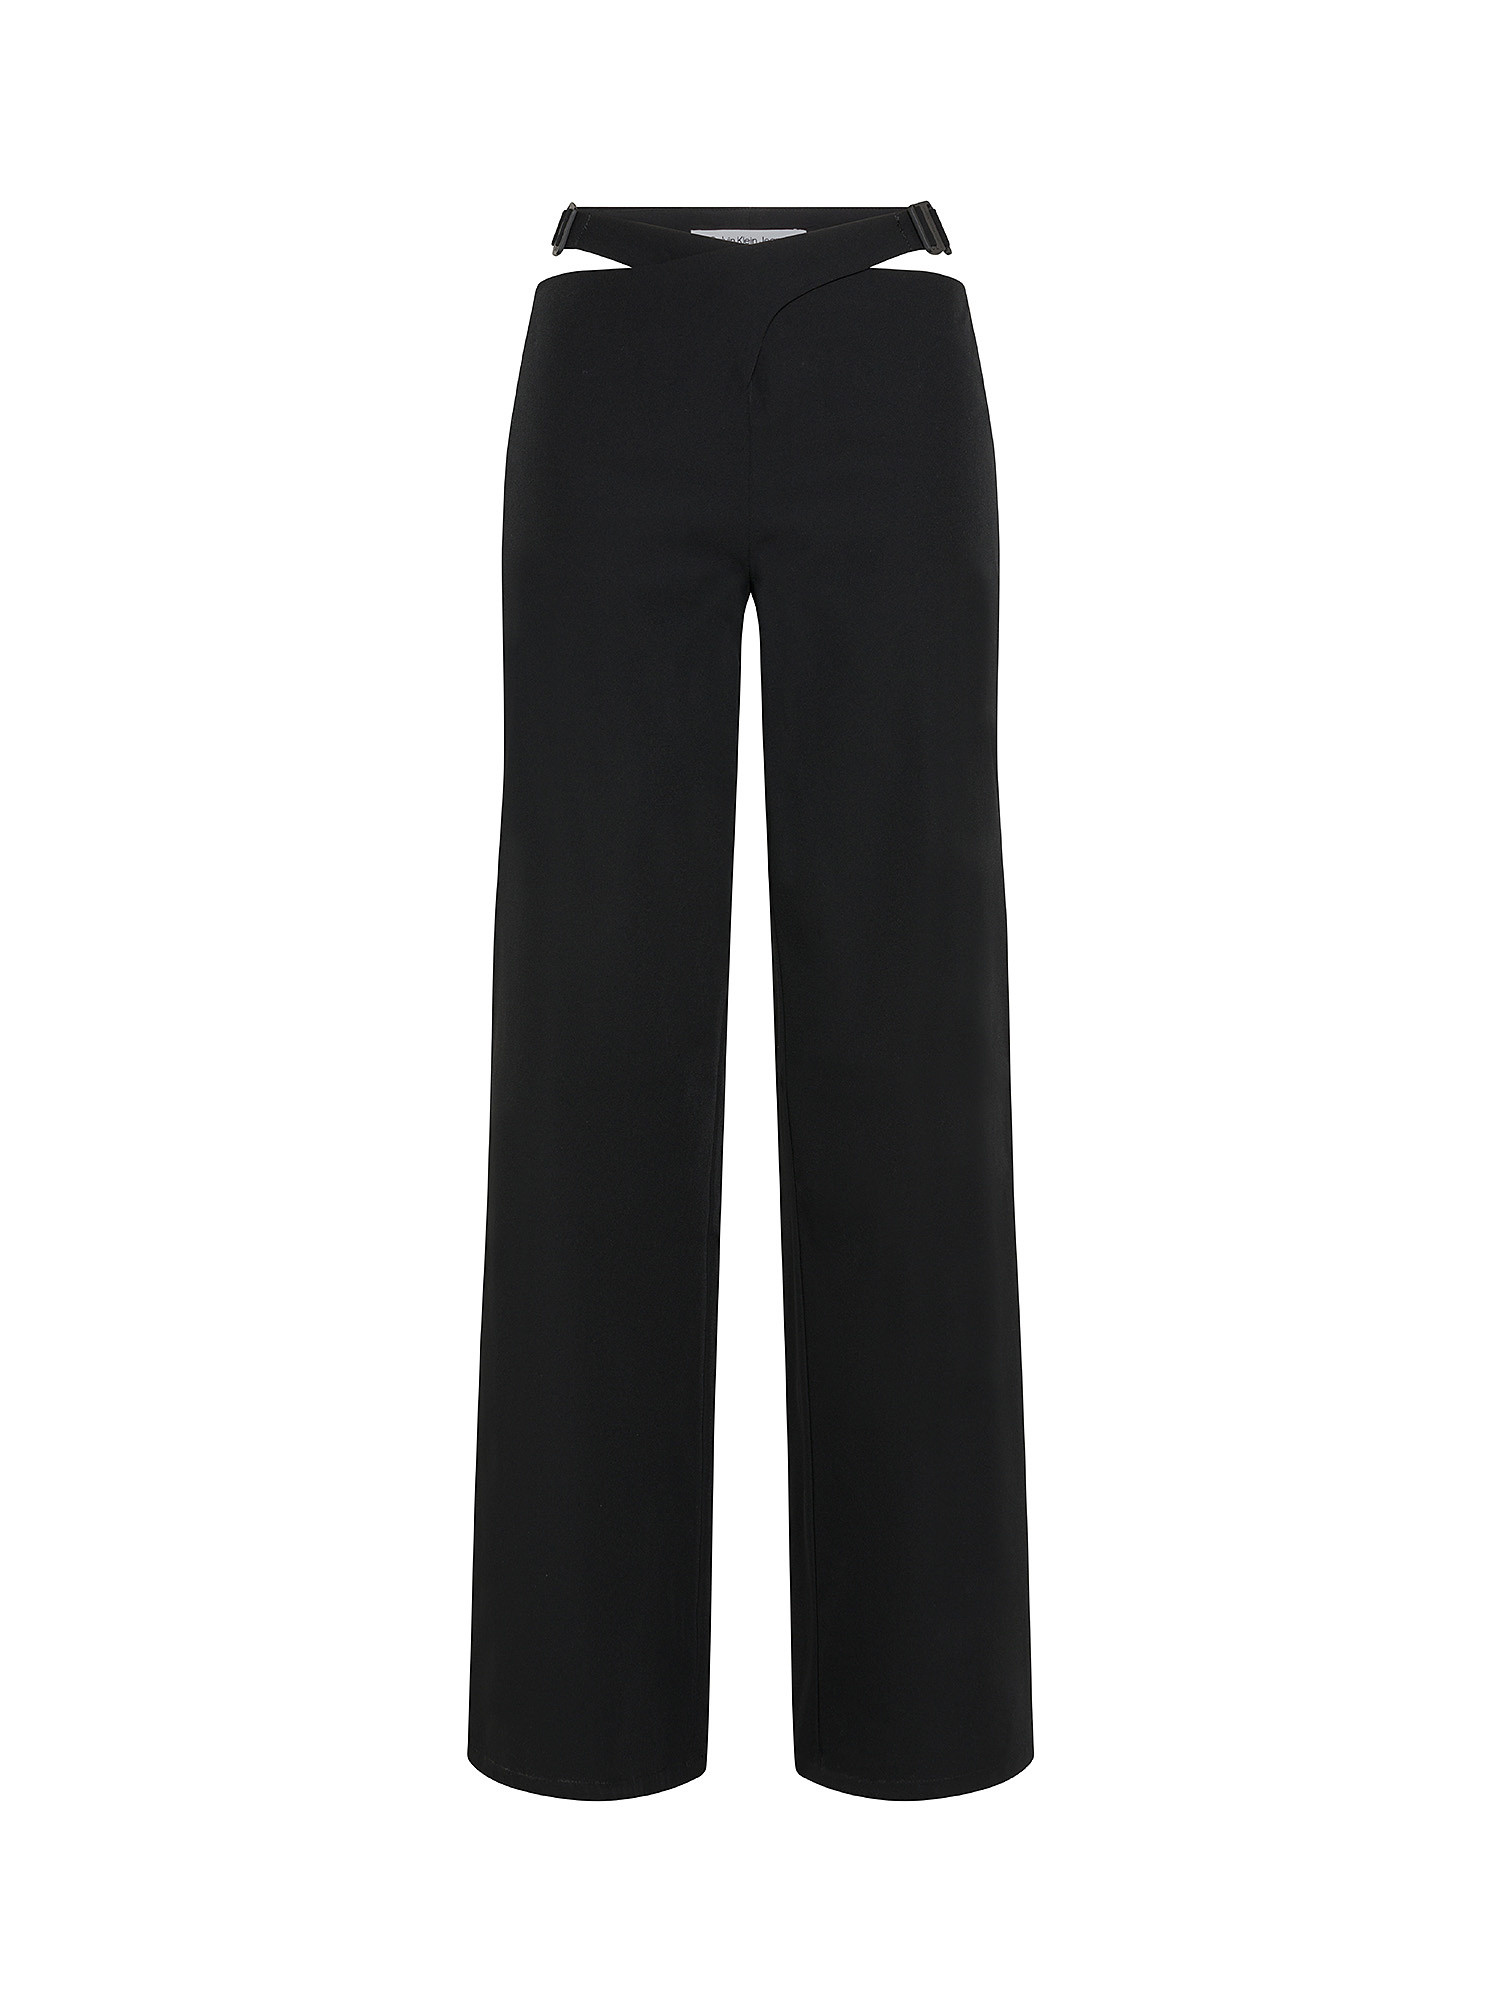 Calvin Klein Jeans - Cut Out Pants, Black, large image number 0